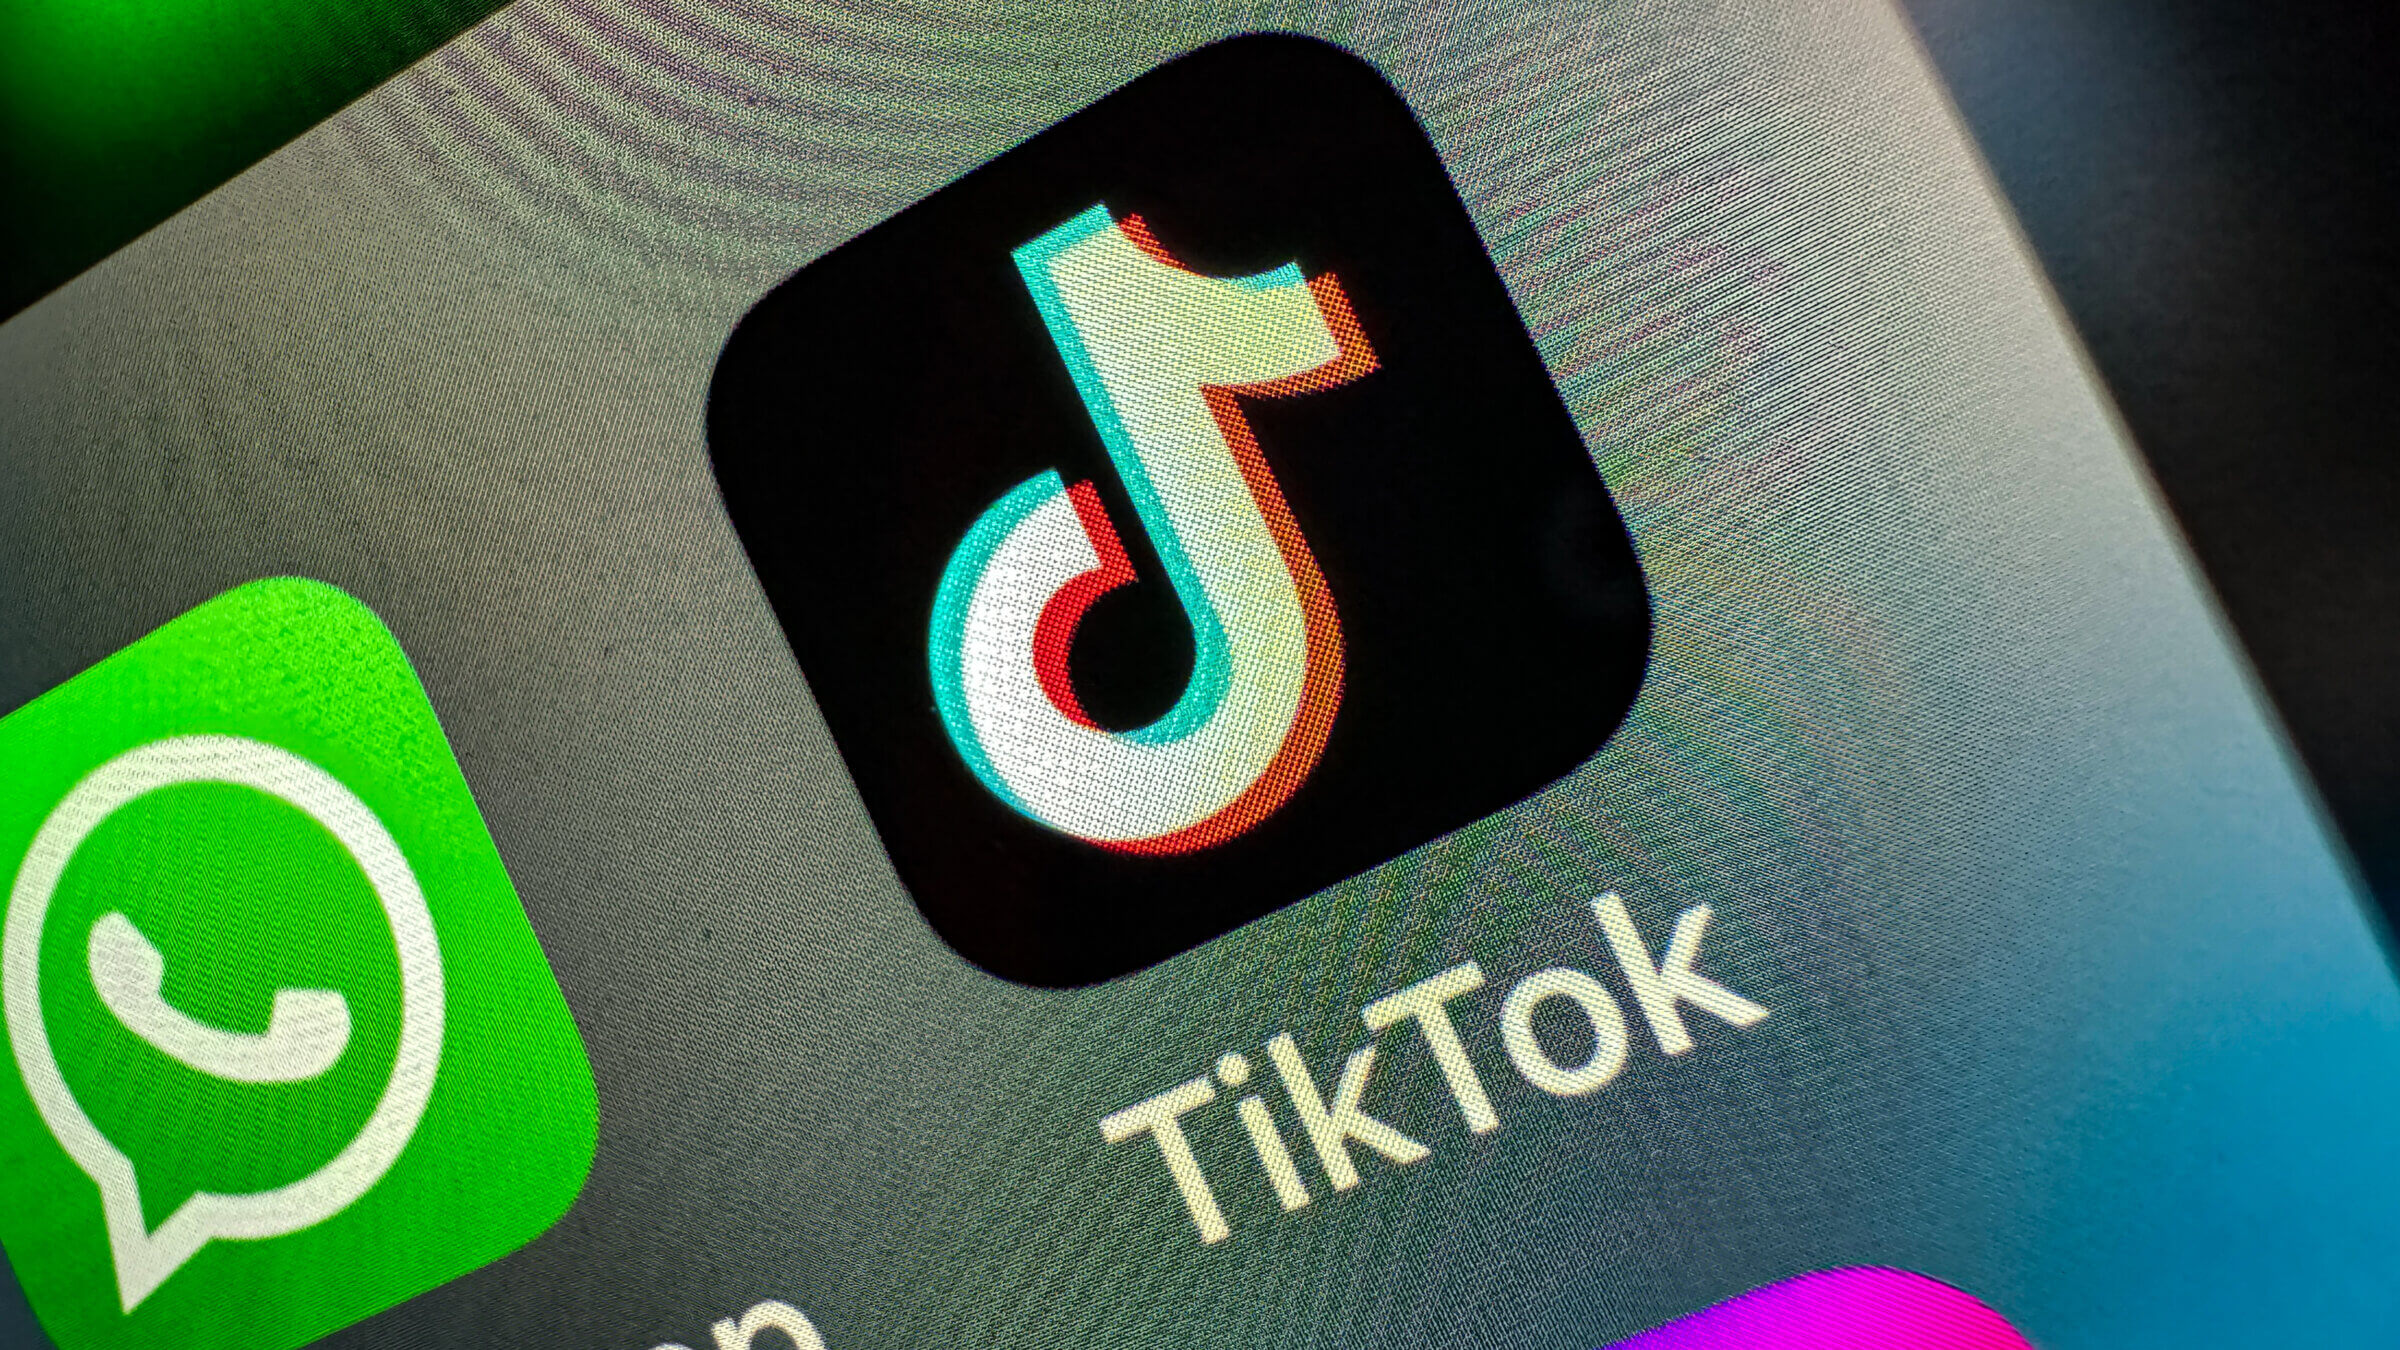 Creators on TikTok claim the app has become increasingly hostile for Jews.